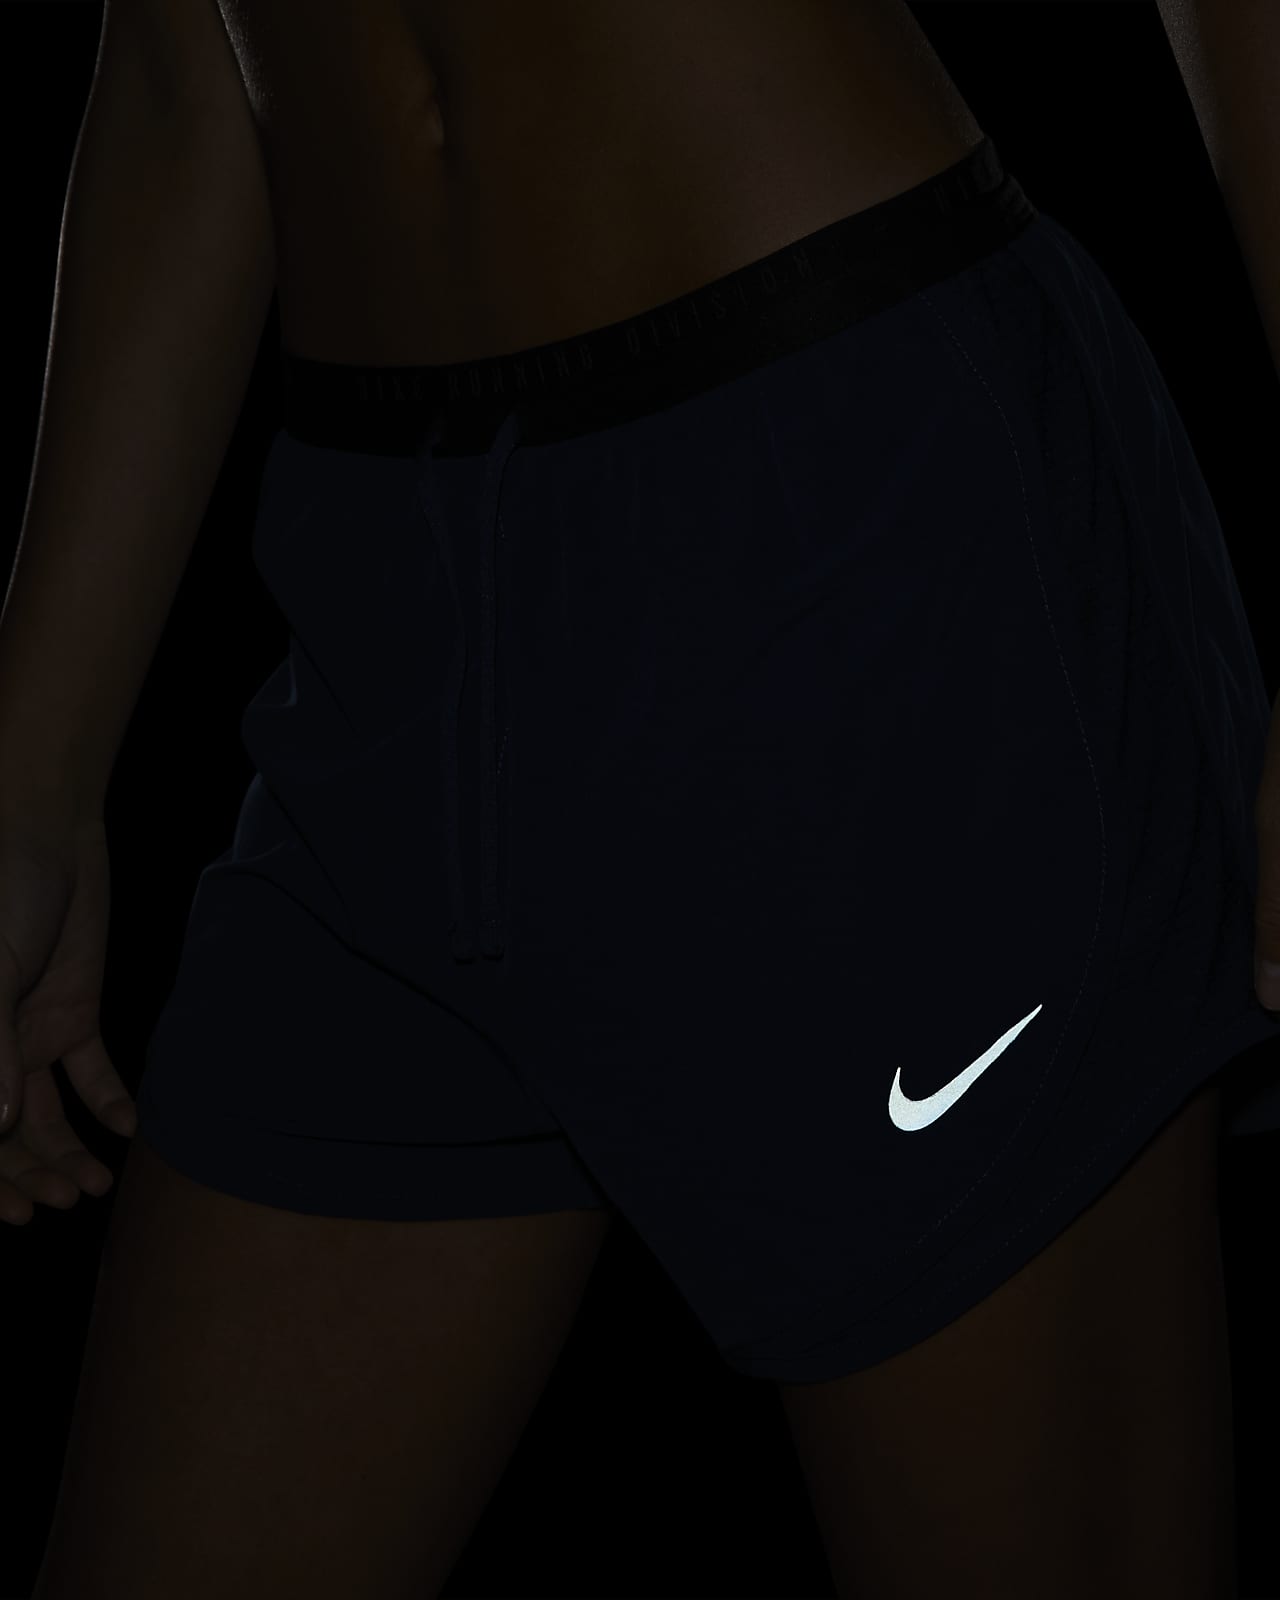 NIKE Nike Tempo Luxe Women's Running Shorts